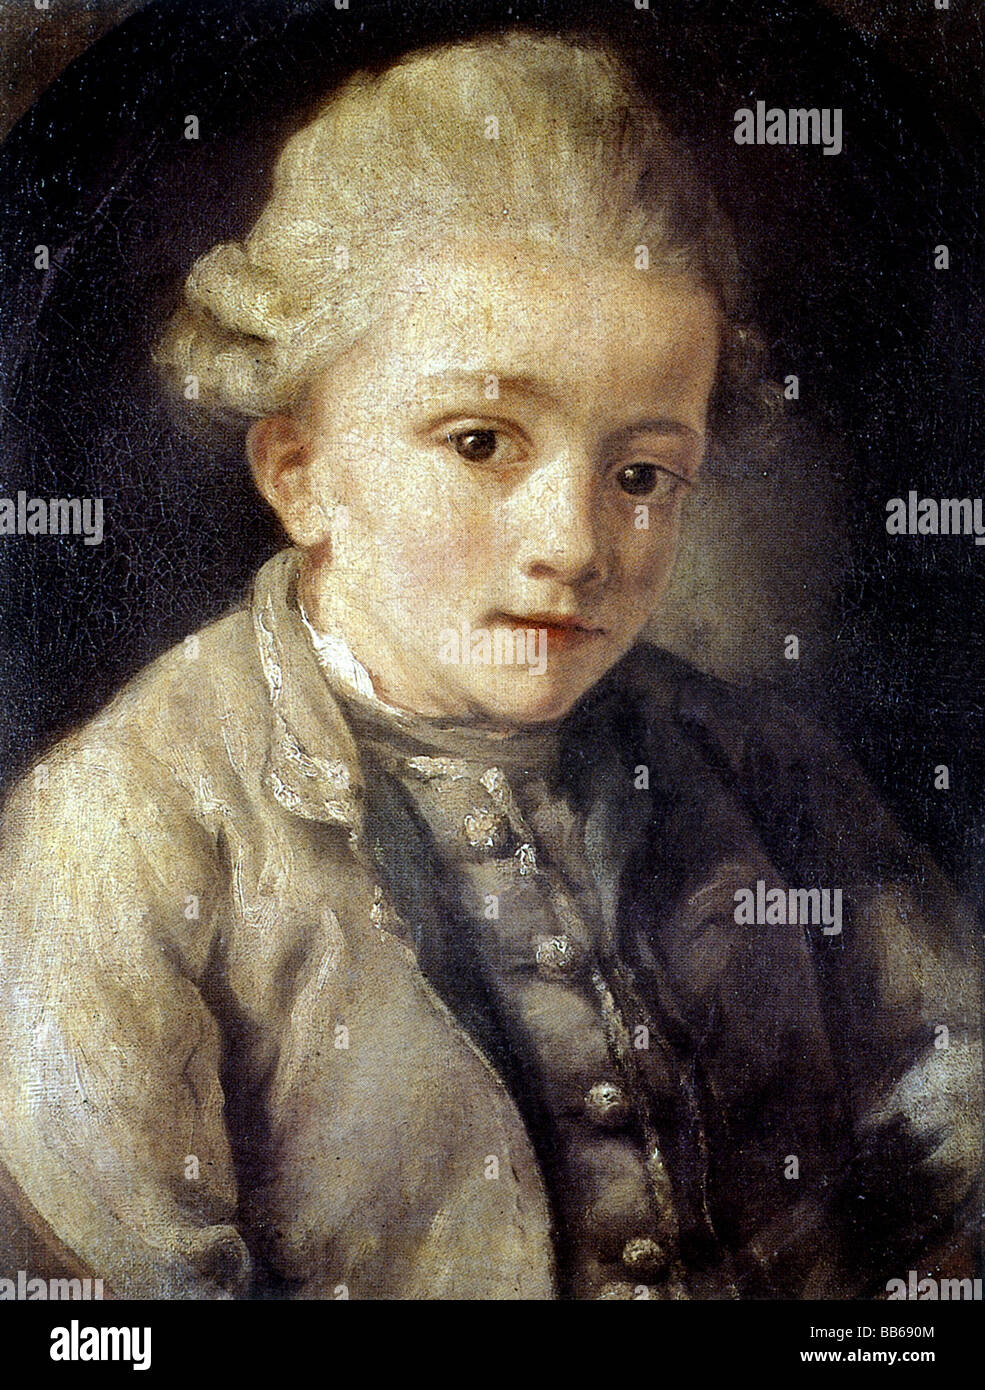 Mozart, Wolfgang Amadeus, 27.1.1756 - 5.12.1791, compositor austriaco, retrato (no autenticado), pintura, atribuido a Jean Baptiste Greuze (1725 - 1805), 1763 - 1764, Foto de stock